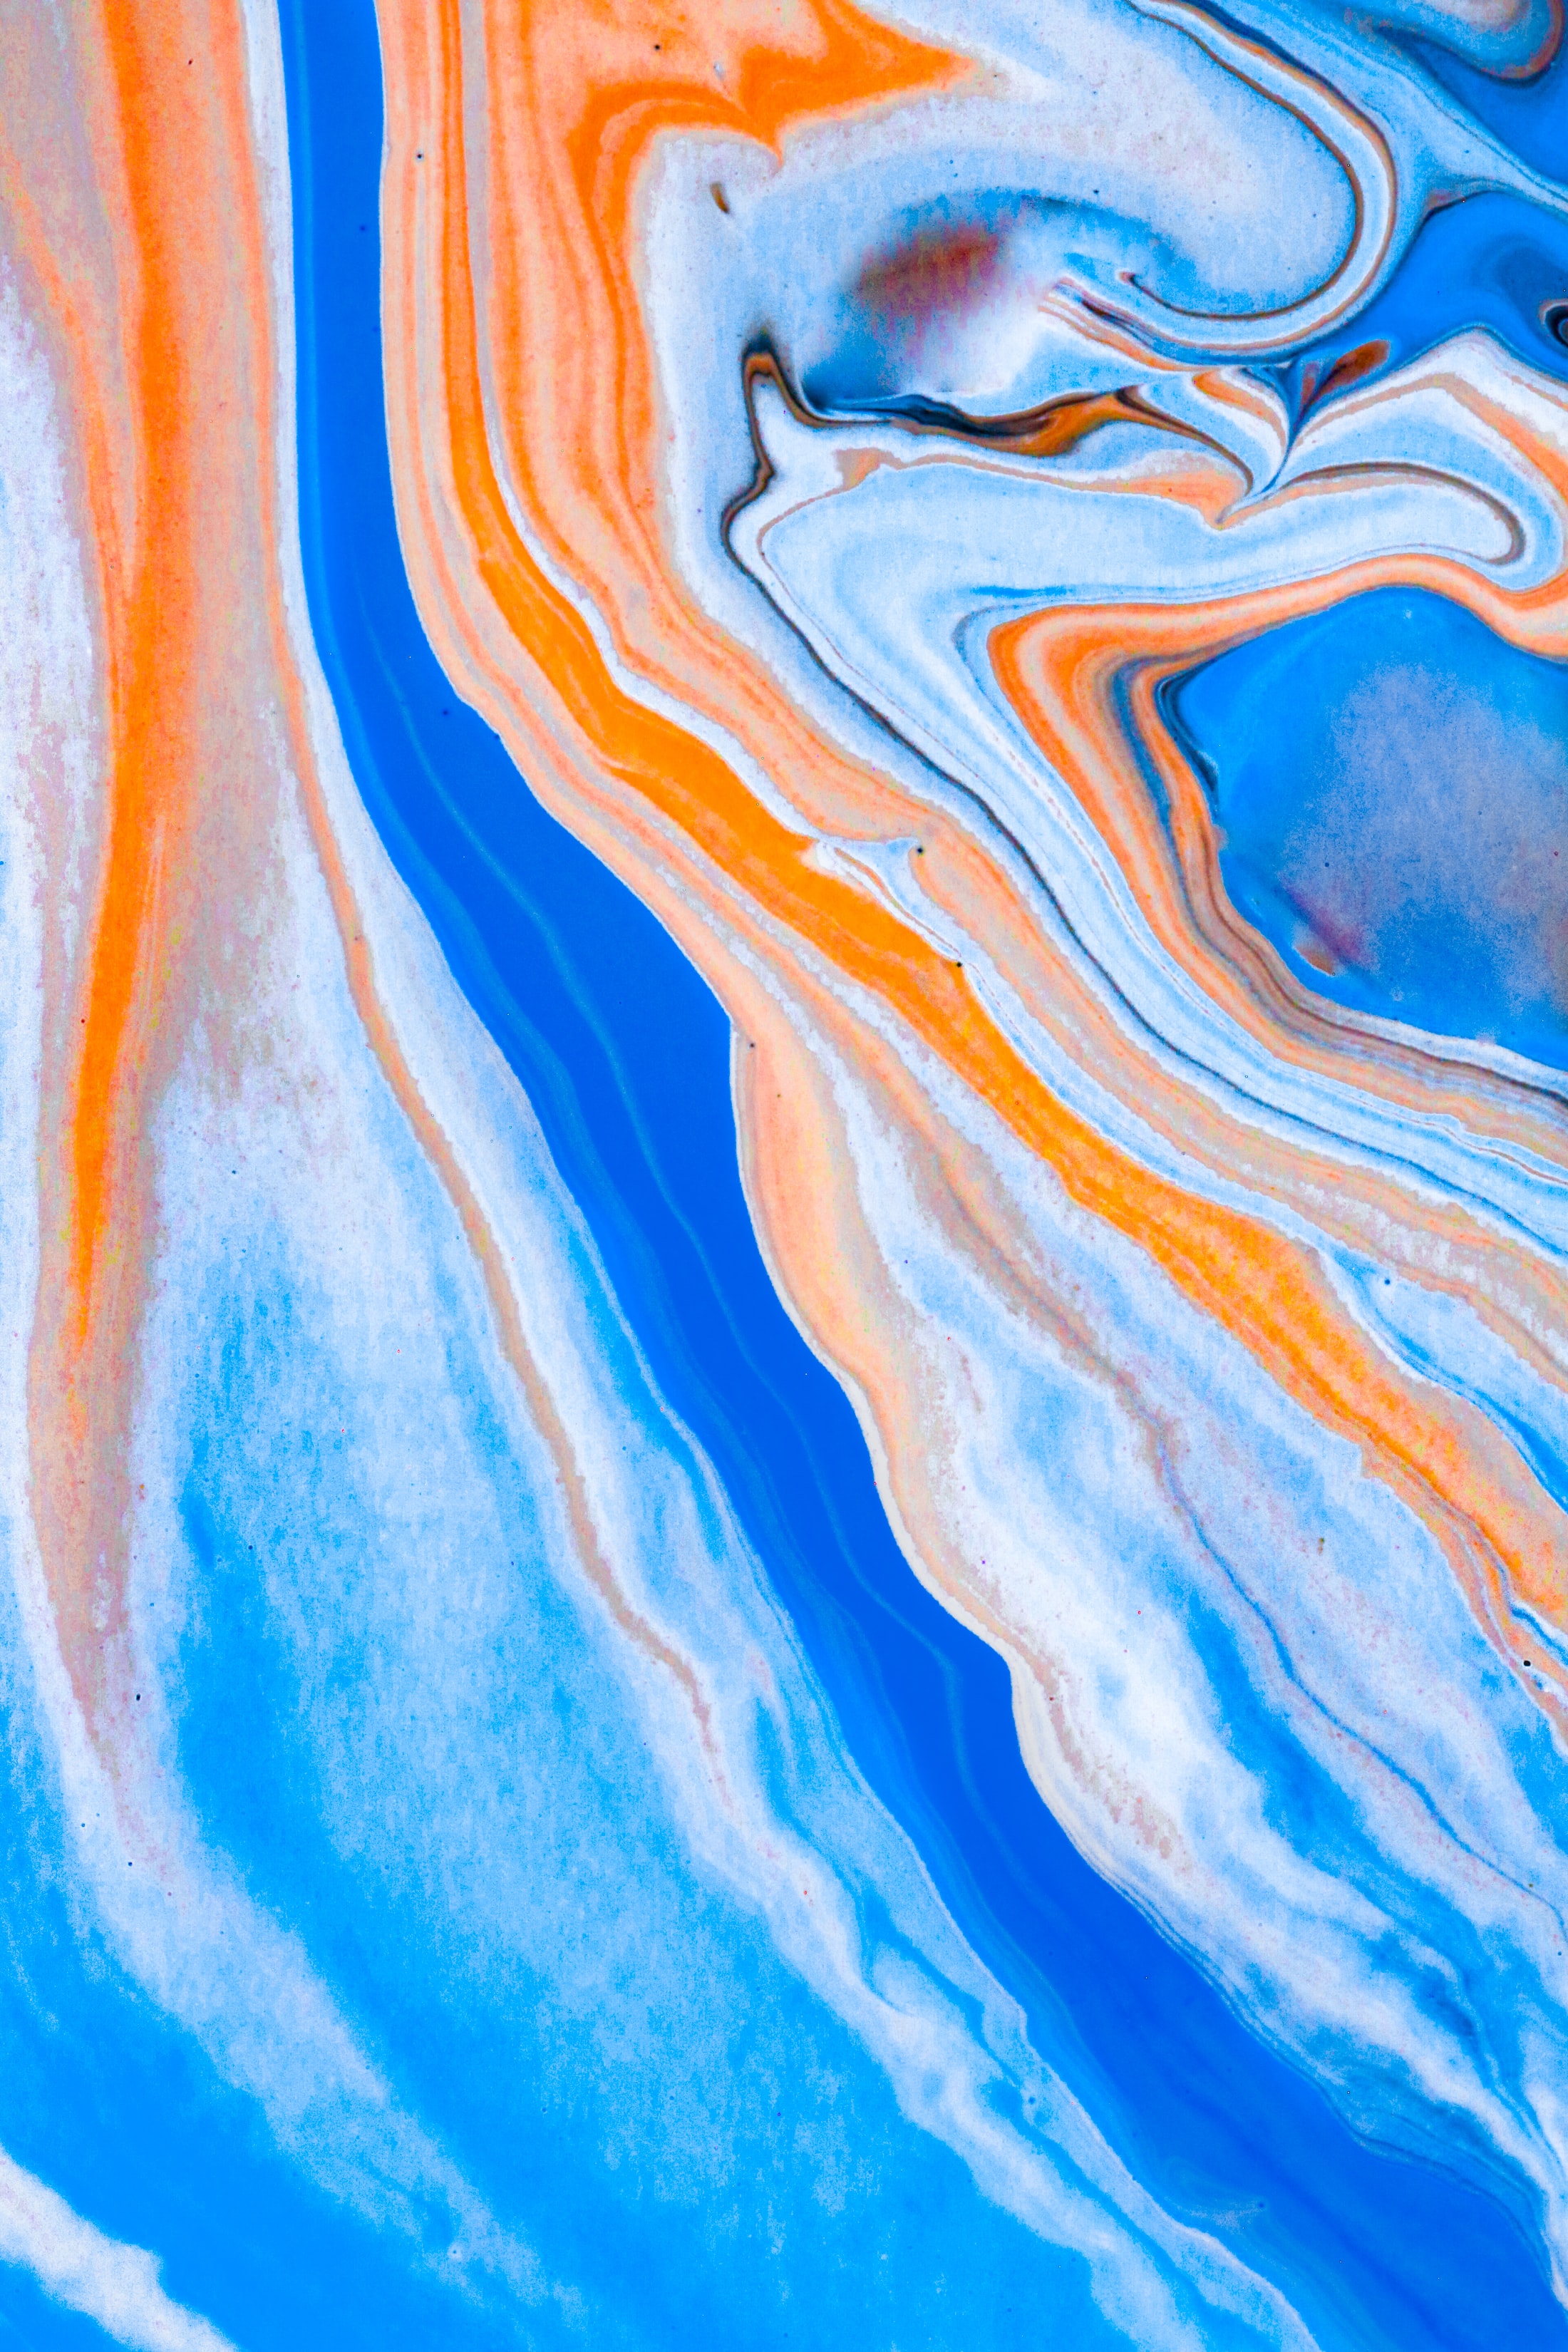 vertical wallpaper divorces, abstract, blue, orange, paint, liquid, layers